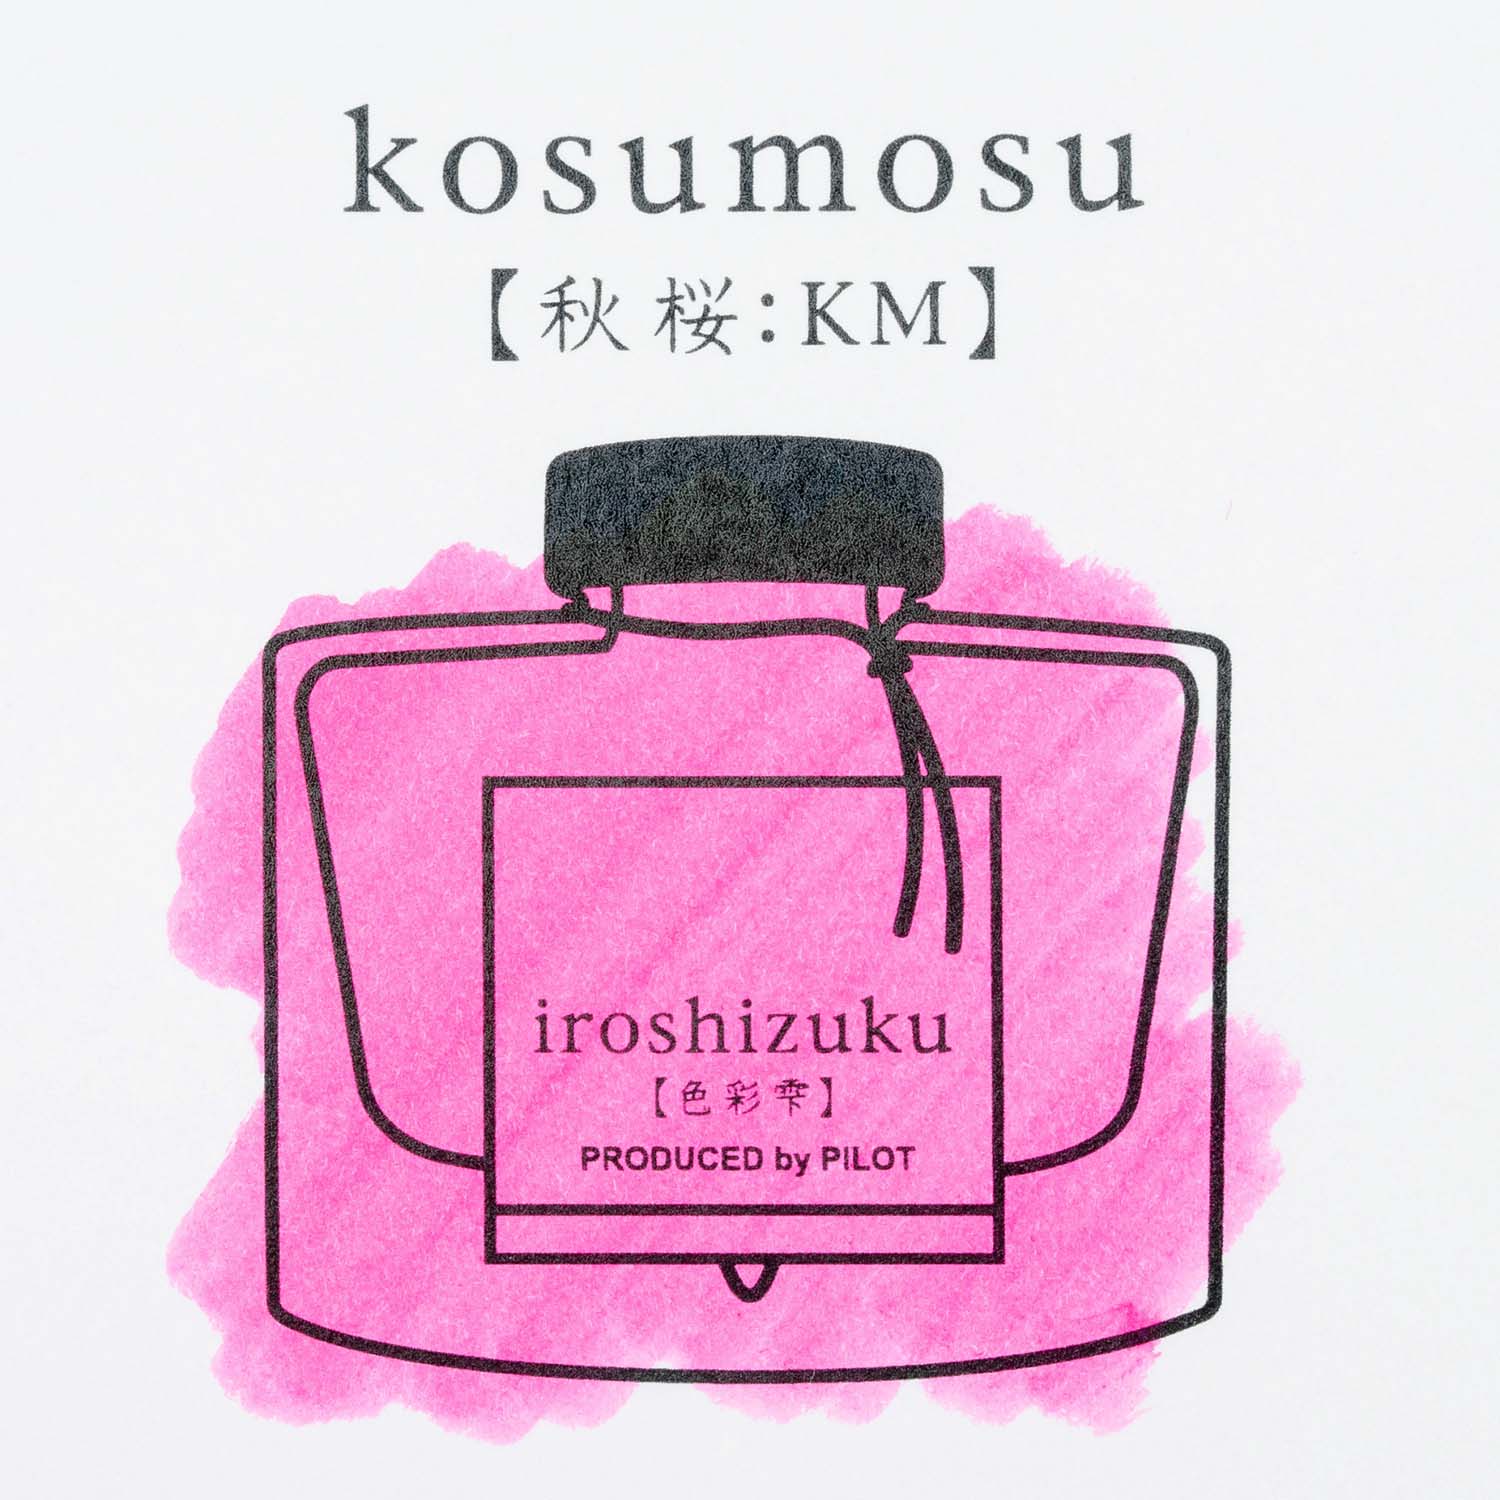 Pilot Iroshizuku Ink - Sho-ko Gift Set - 30 ml Bottles - Limited Edition